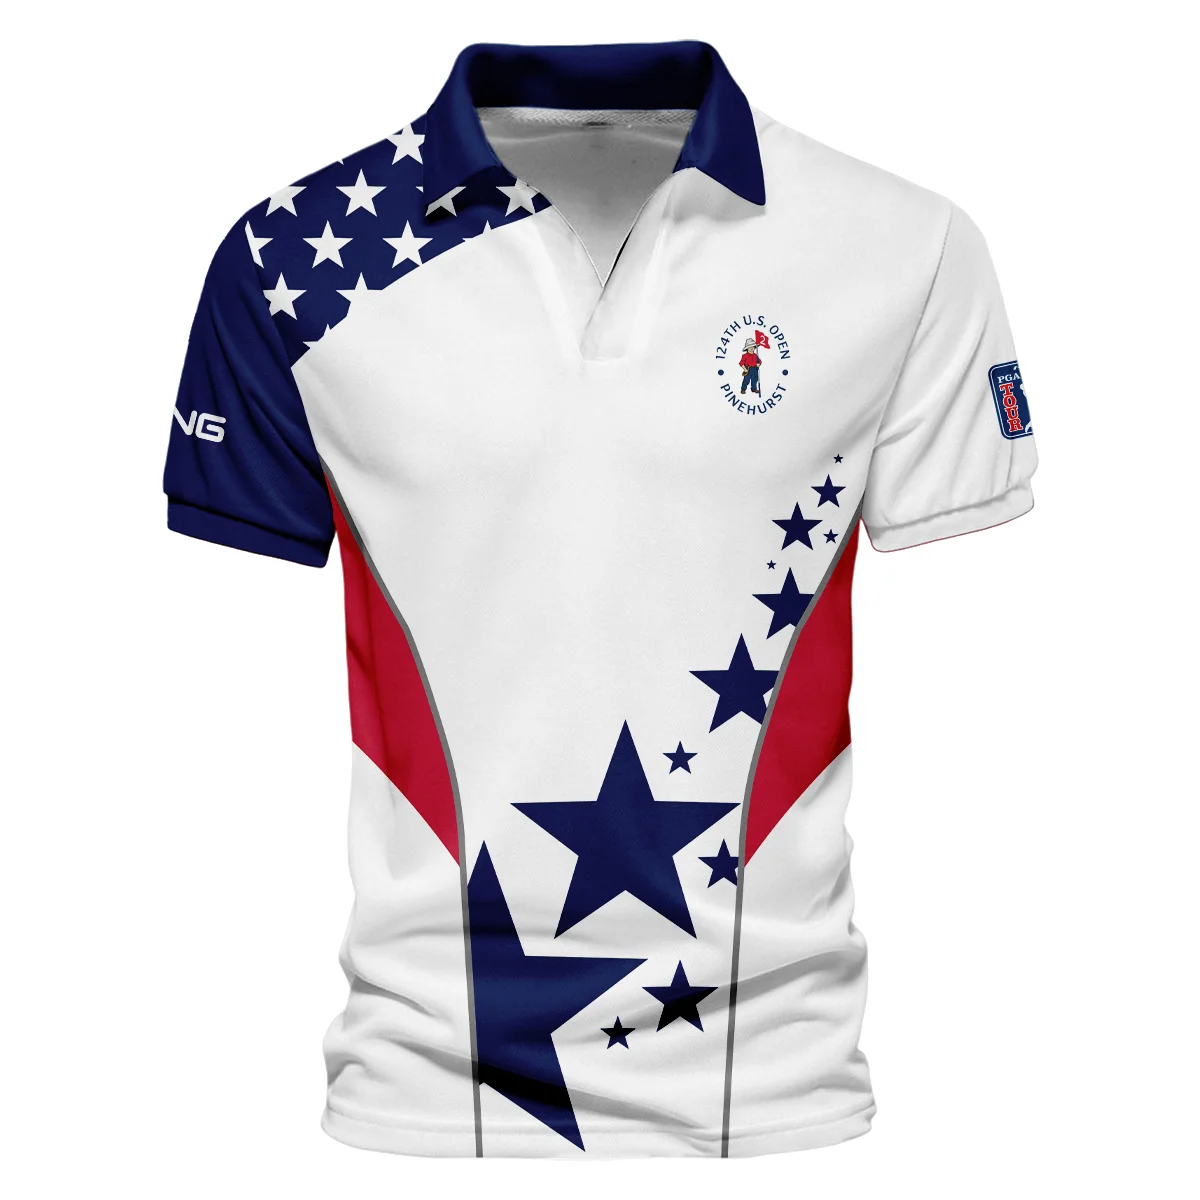 124th U.S. Open Pinehurst Ping Stars US Flag White Blue Quarter-Zip Jacket Style Classic Quarter-Zip Jacket